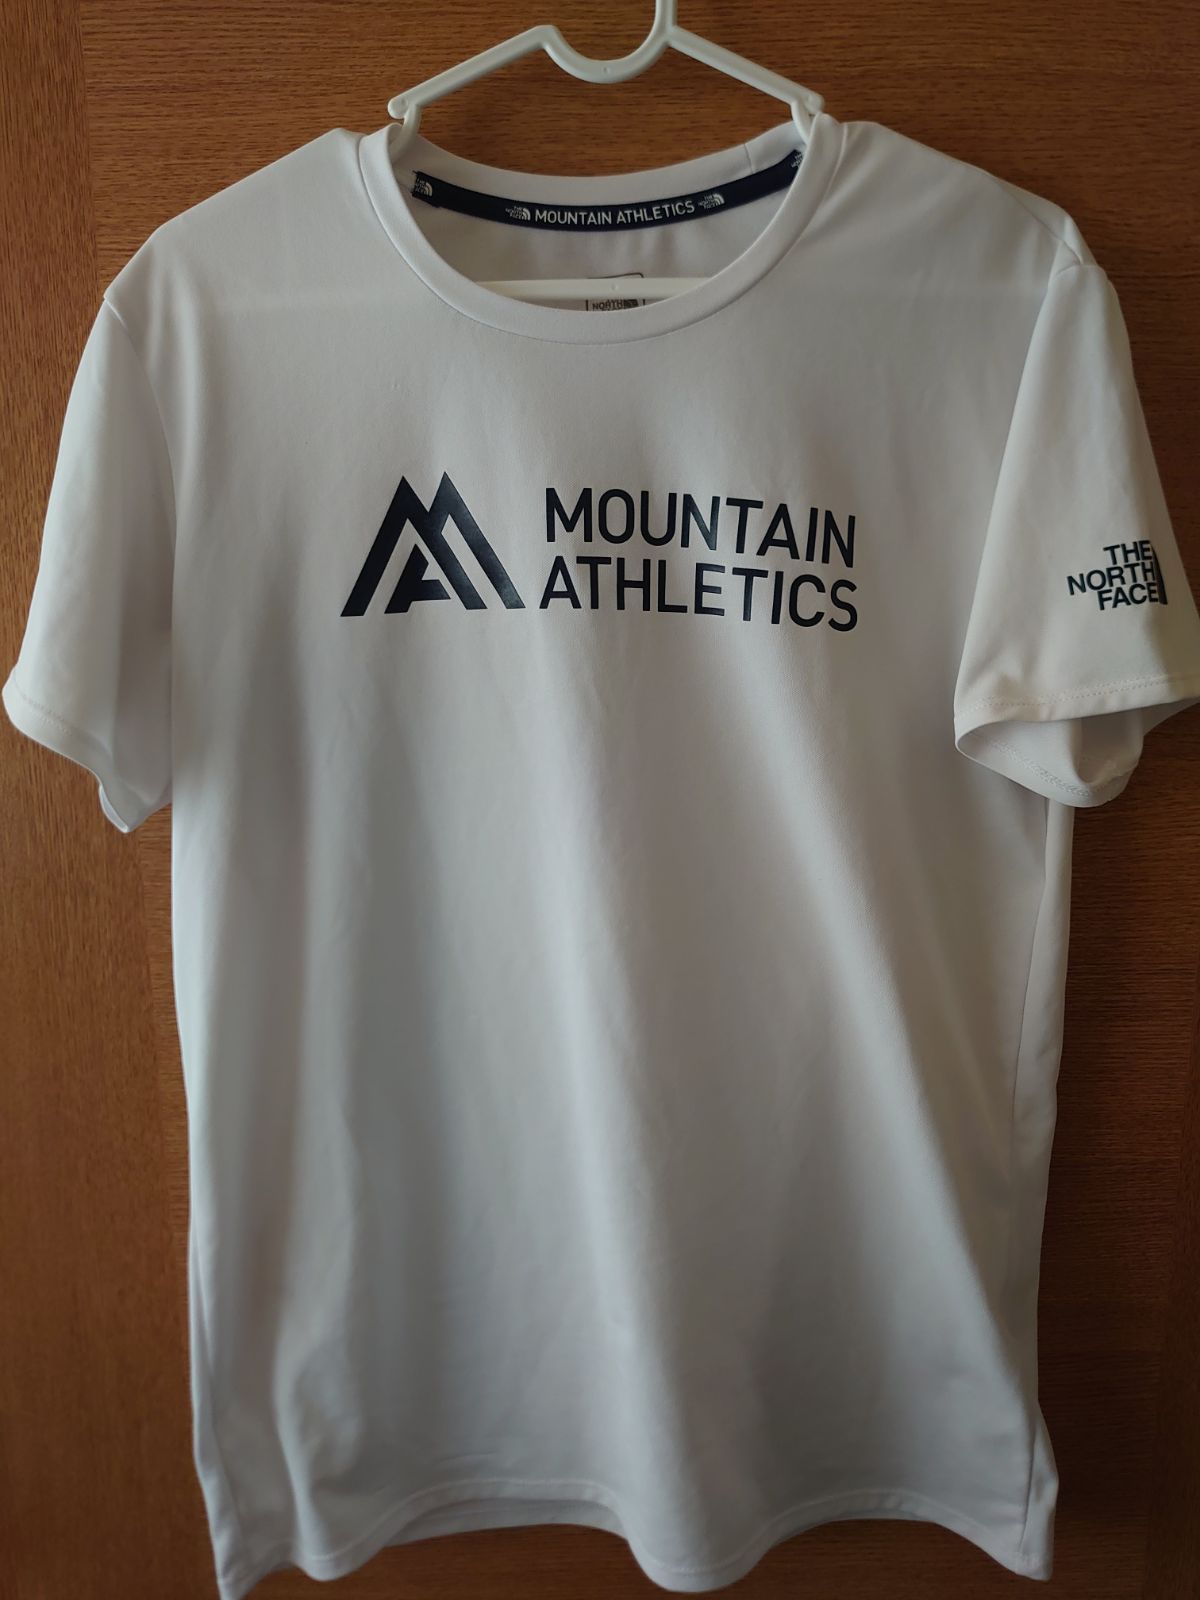 THE NORTH FACE MOUNTAIN ATHLETICS Tシャツ - メルカリ